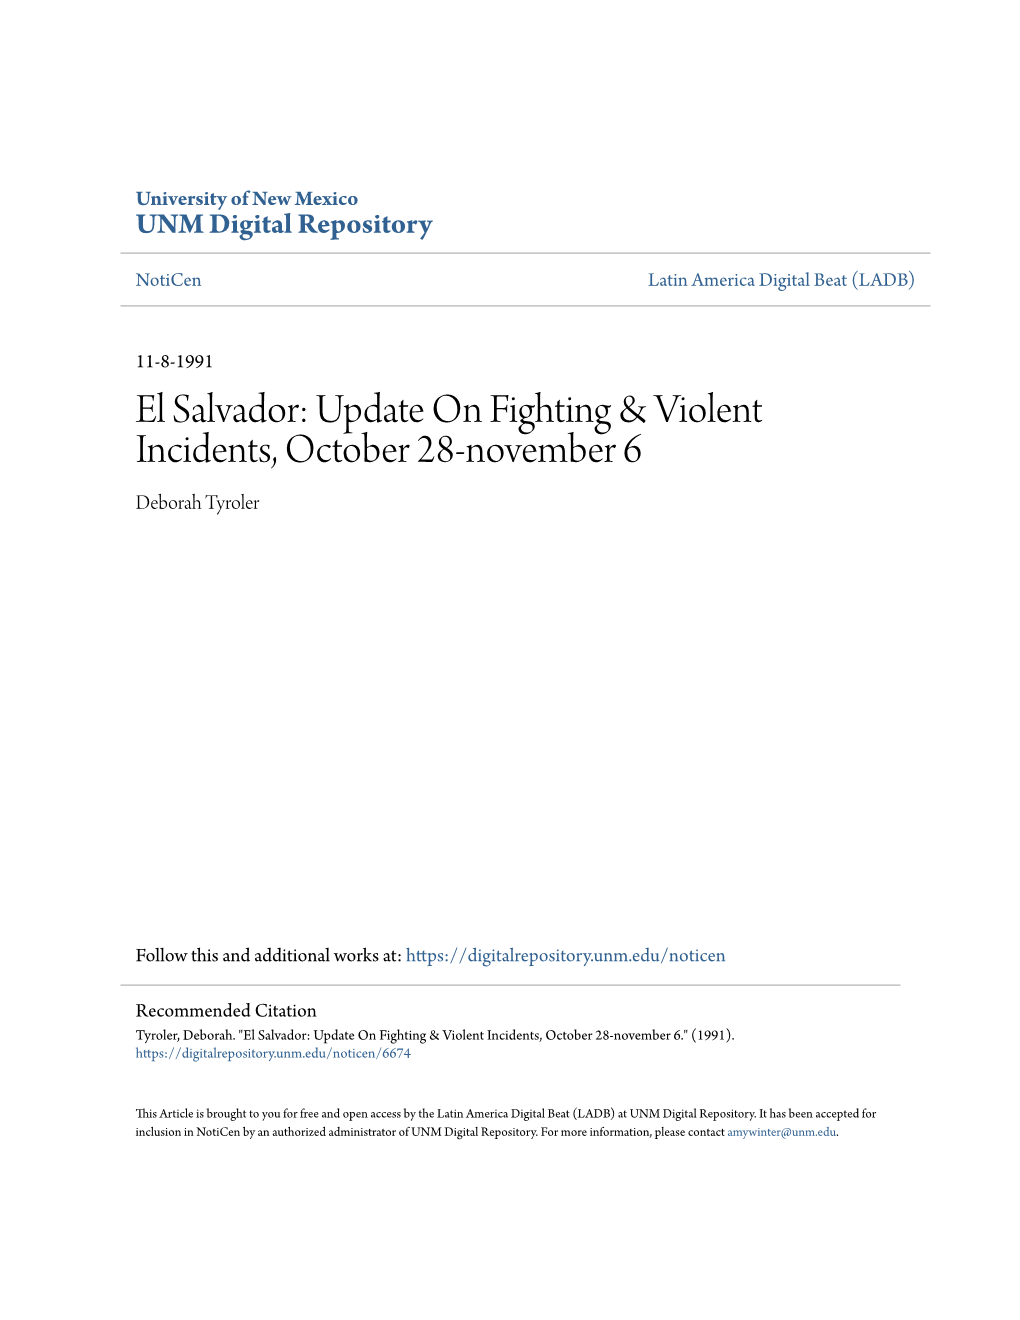 El Salvador: Update on Fighting & Violent Incidents, October 28-November 6 Deborah Tyroler